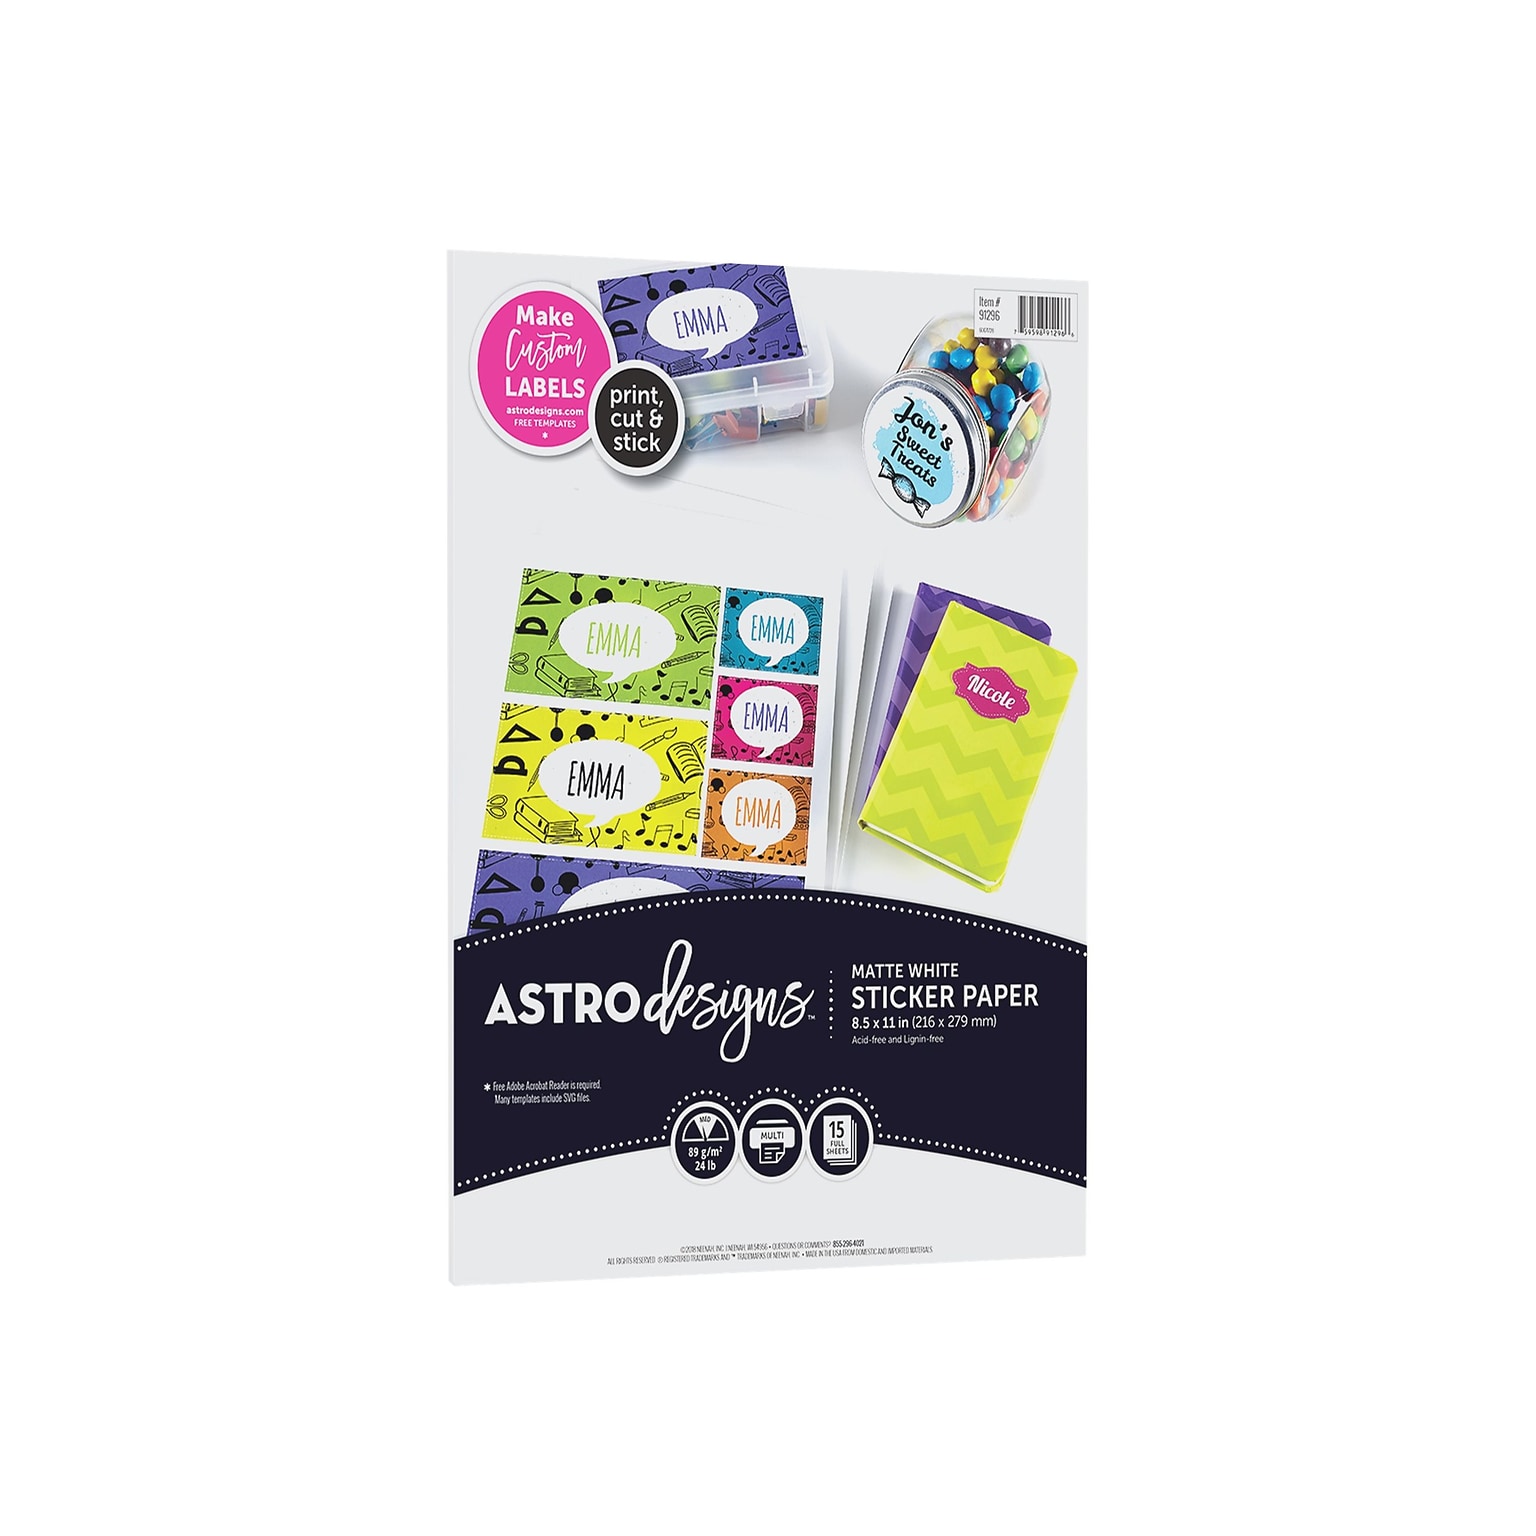 Astrobrights Astrodesigns Inkjet/Laser Sticker Paper Labels, 8 1/2 x 11, Matte White, 15 Sheets/Pack (91296-01)